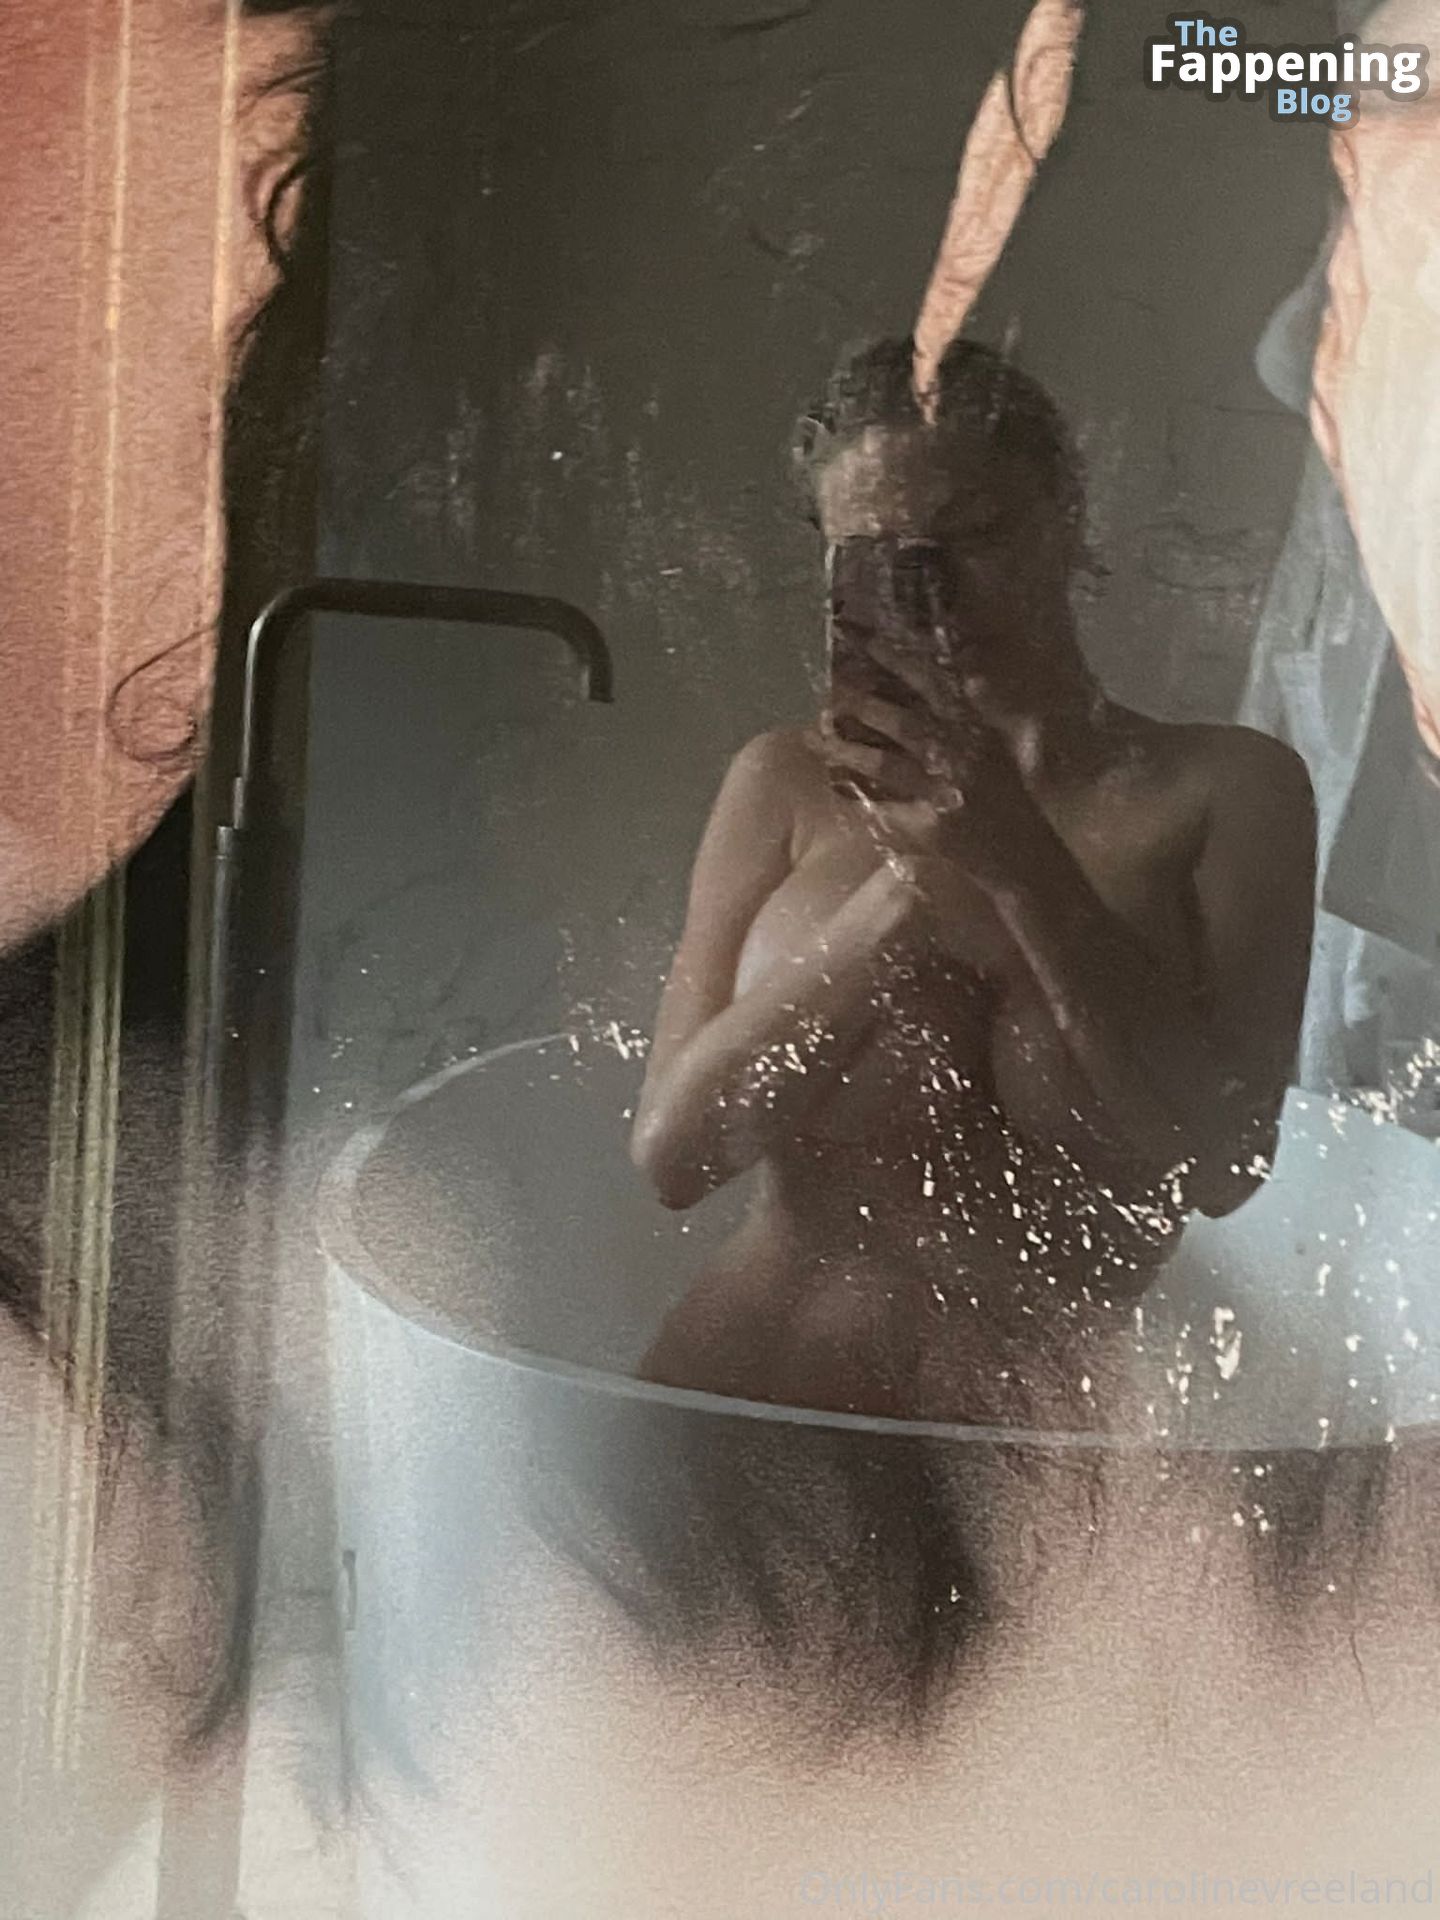 Caroline-Vreeland-Nude-The-Fappening-Blog-2.jpg